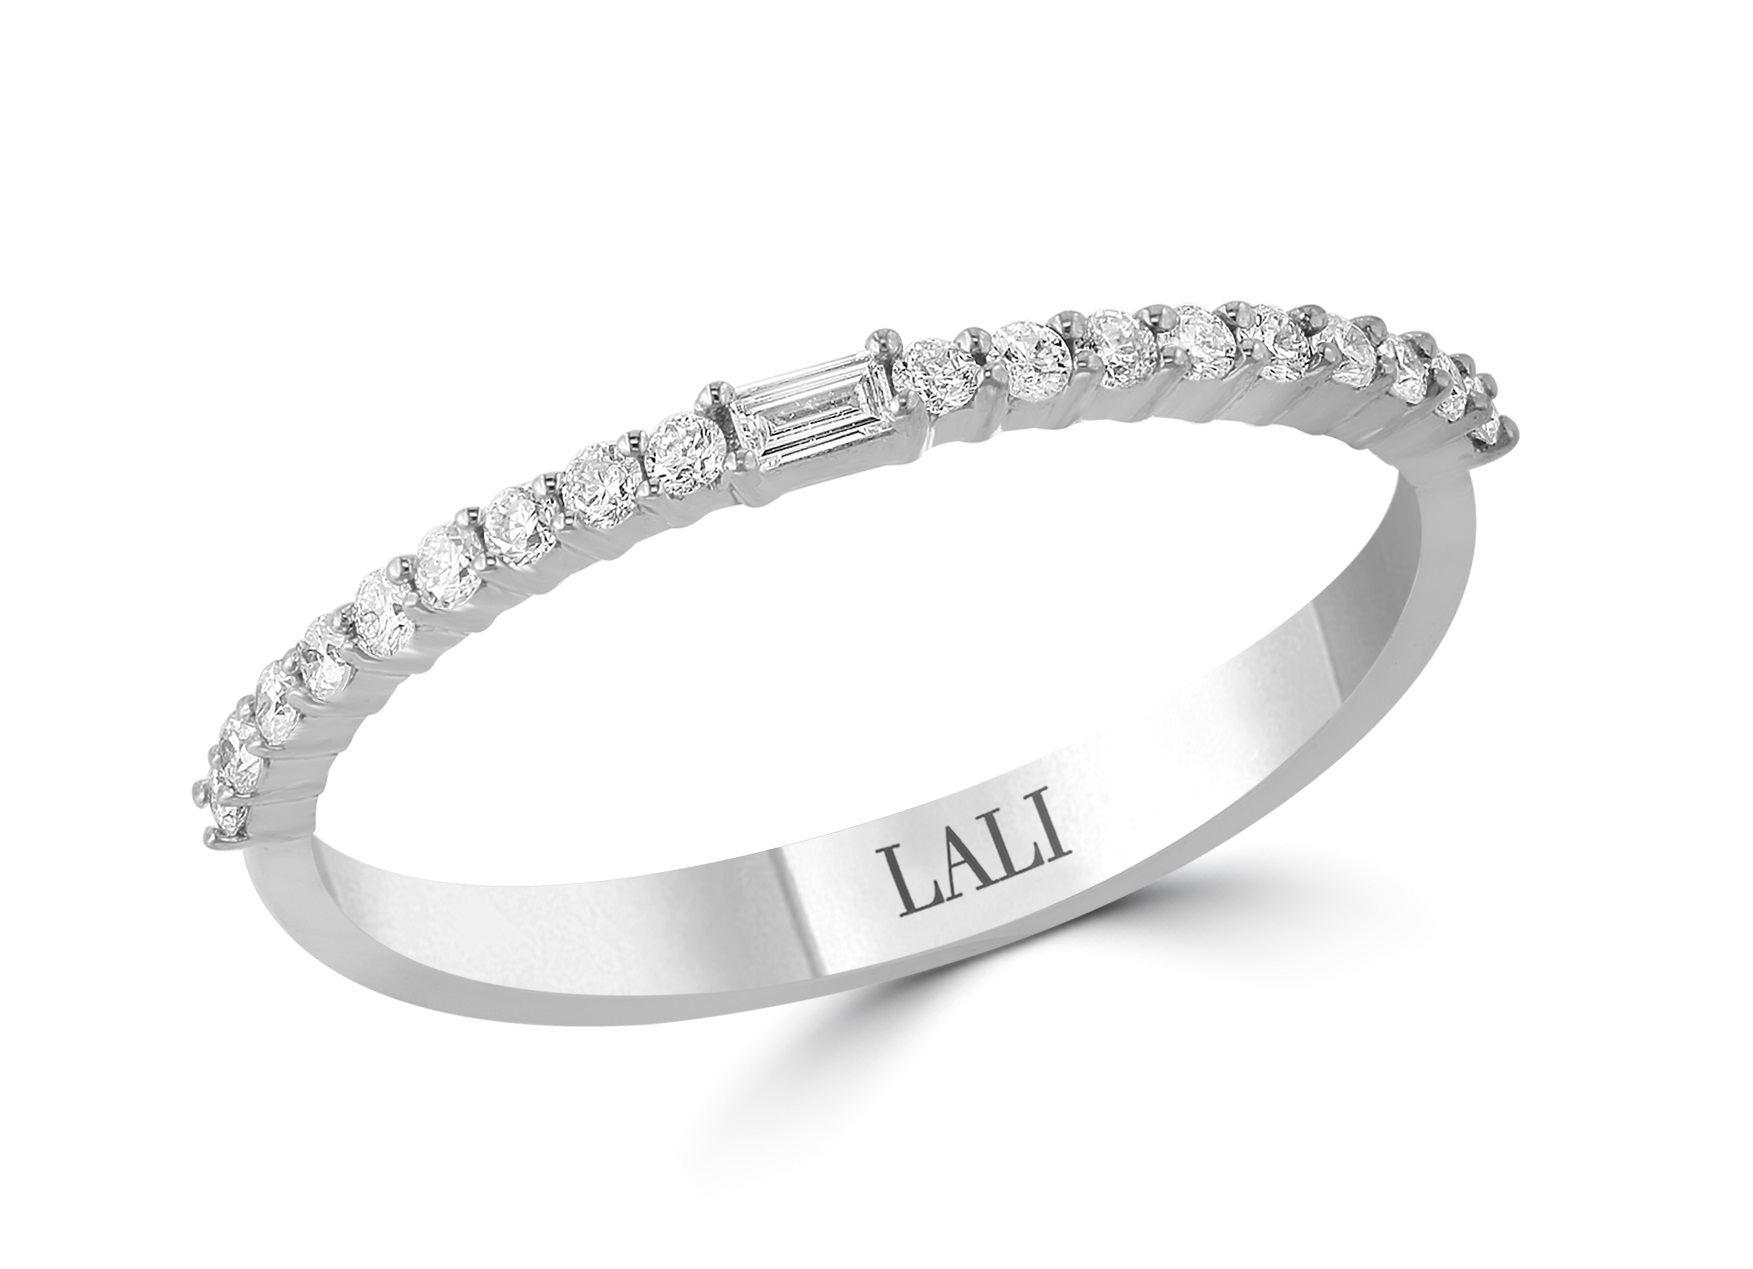 Lali 14 karat white gold diamond full cut and baguette ring